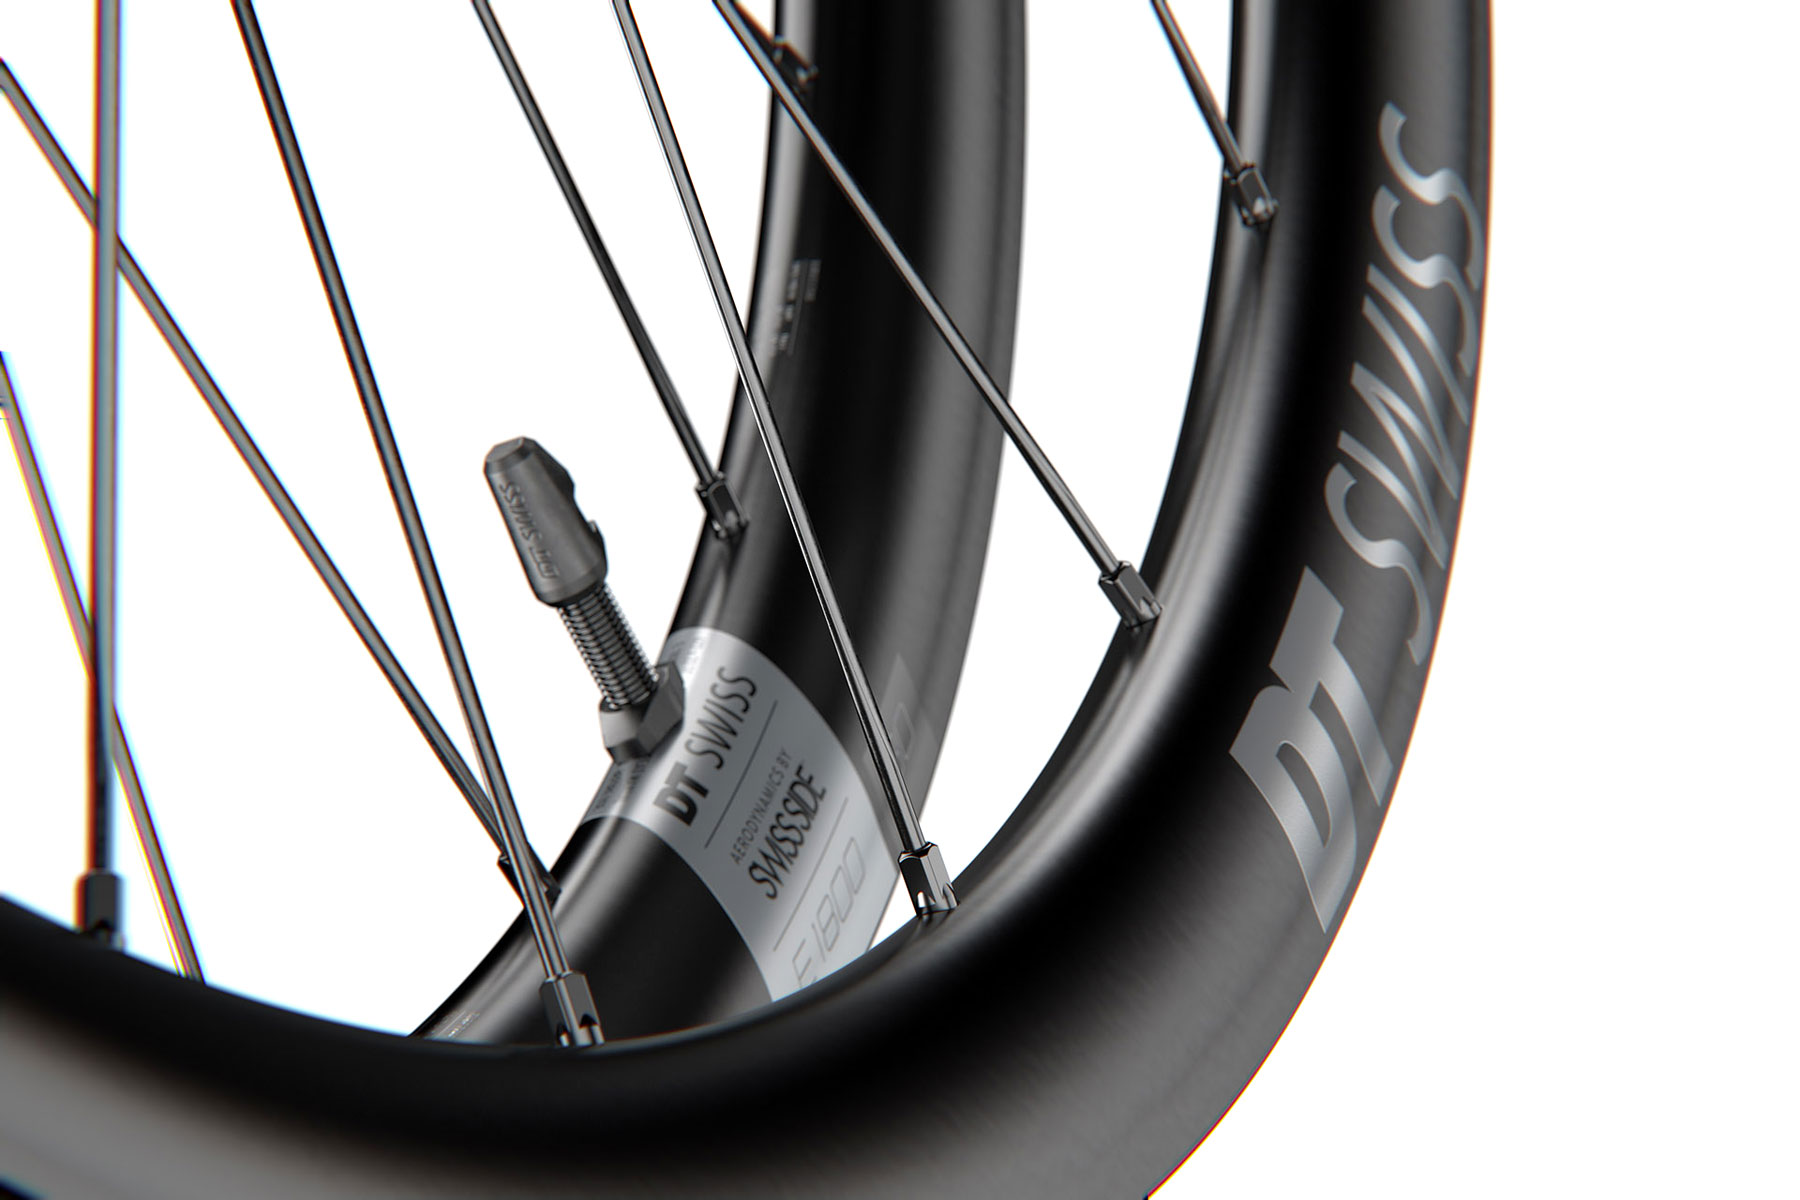 DT Swiss affordable aerodynamic aluminum aero alloy road all-road gravel wheels, E-series with external nipples